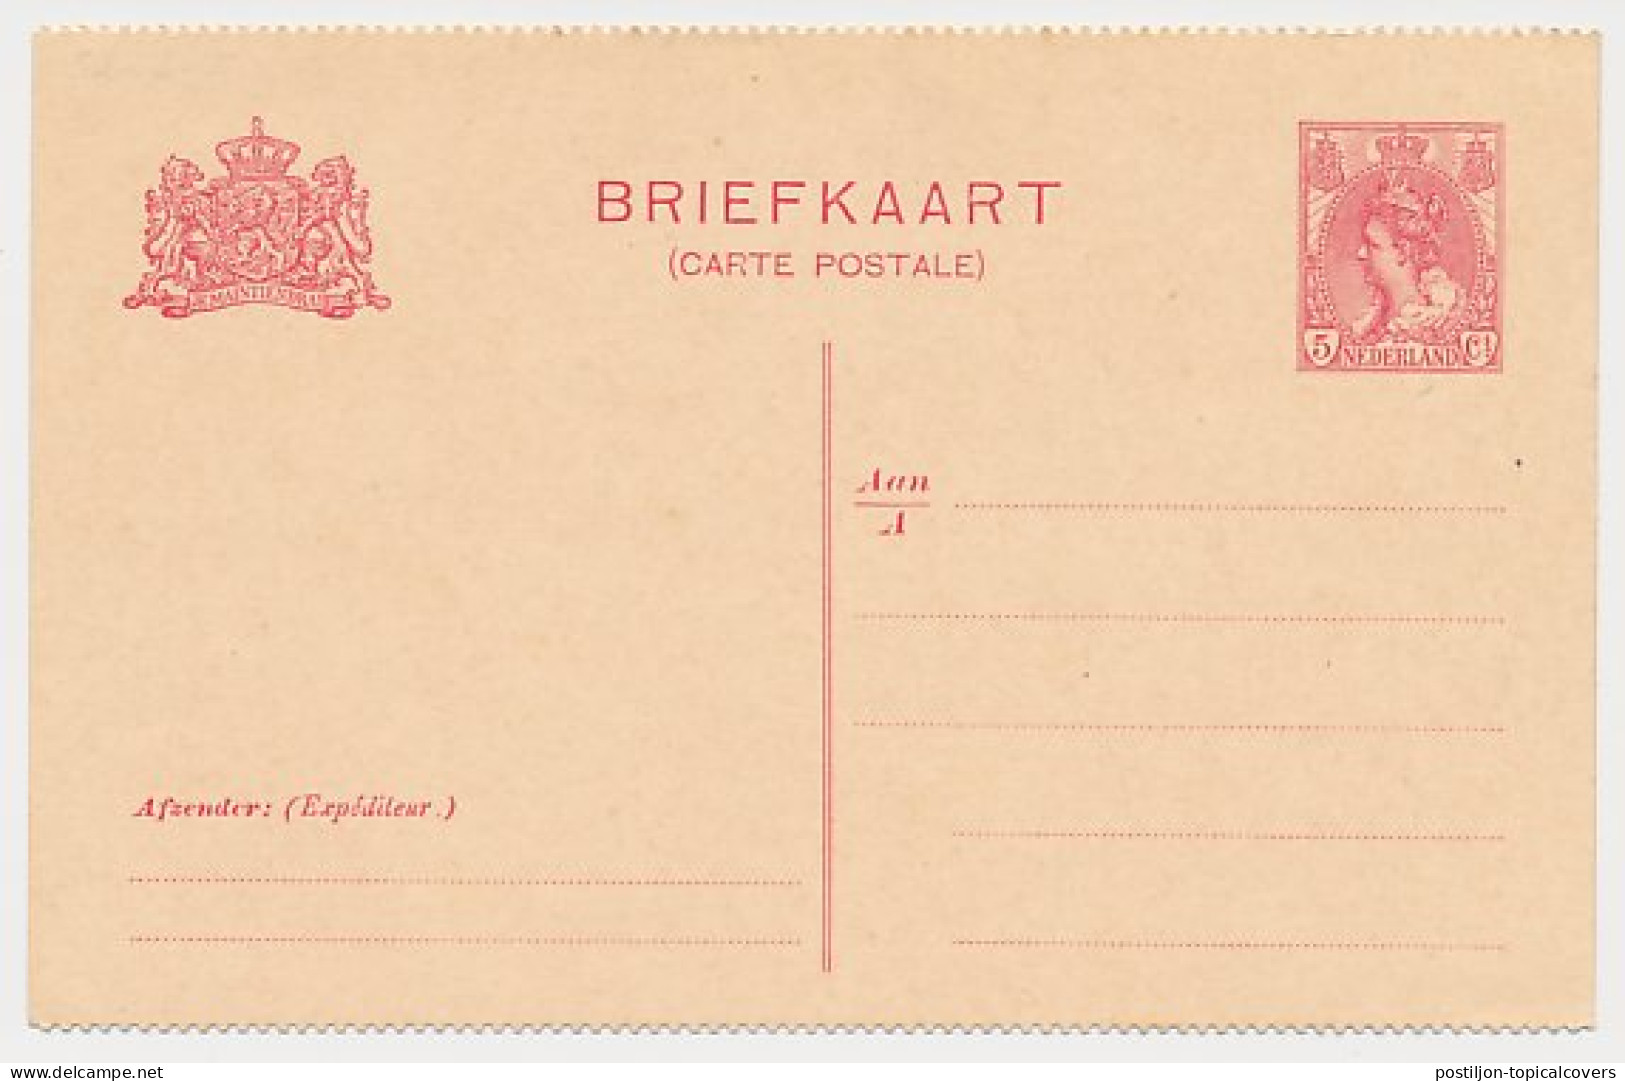 Briefkaart G. 84 B I - Entiers Postaux